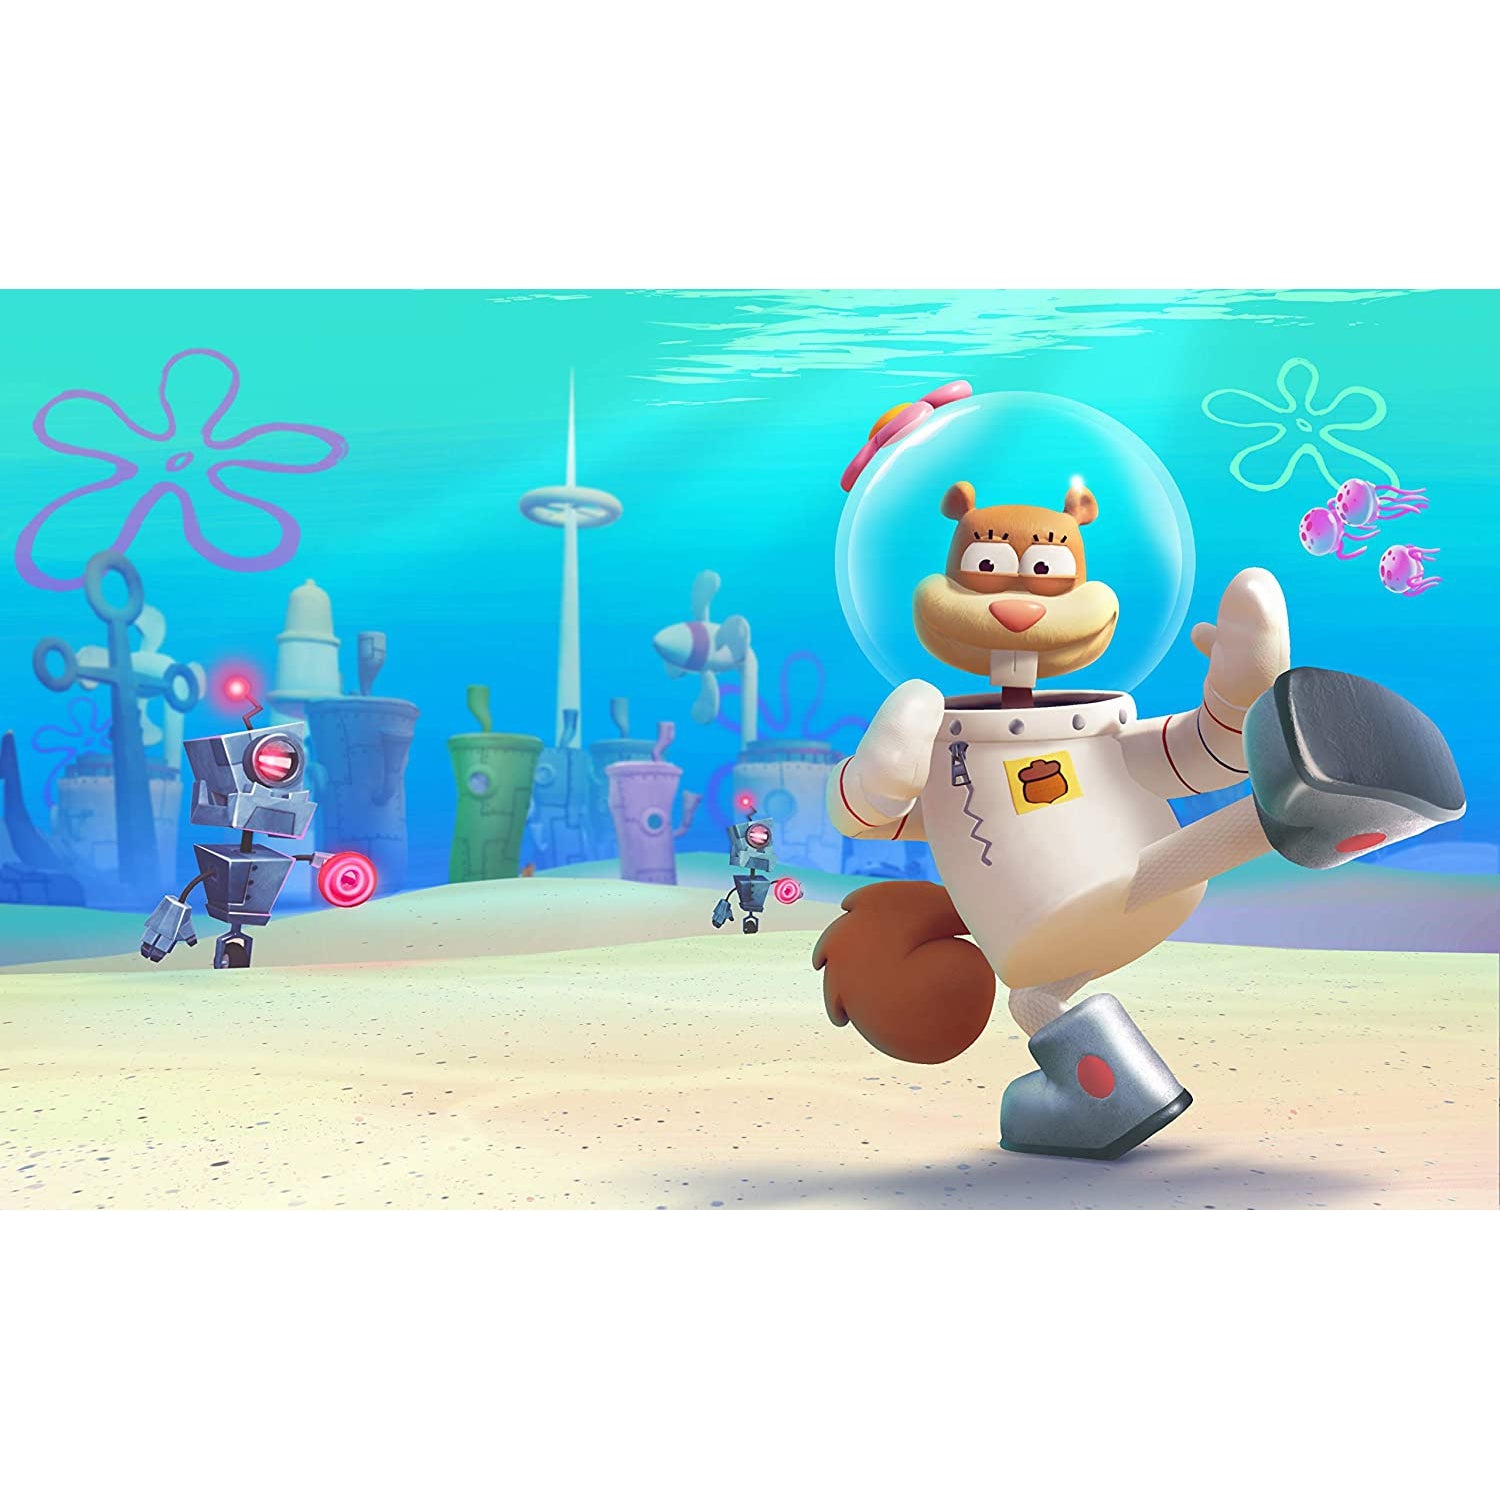 Spongebob SquarePants: Battle for Bikini Bottom Rehydrated (Xbox One)